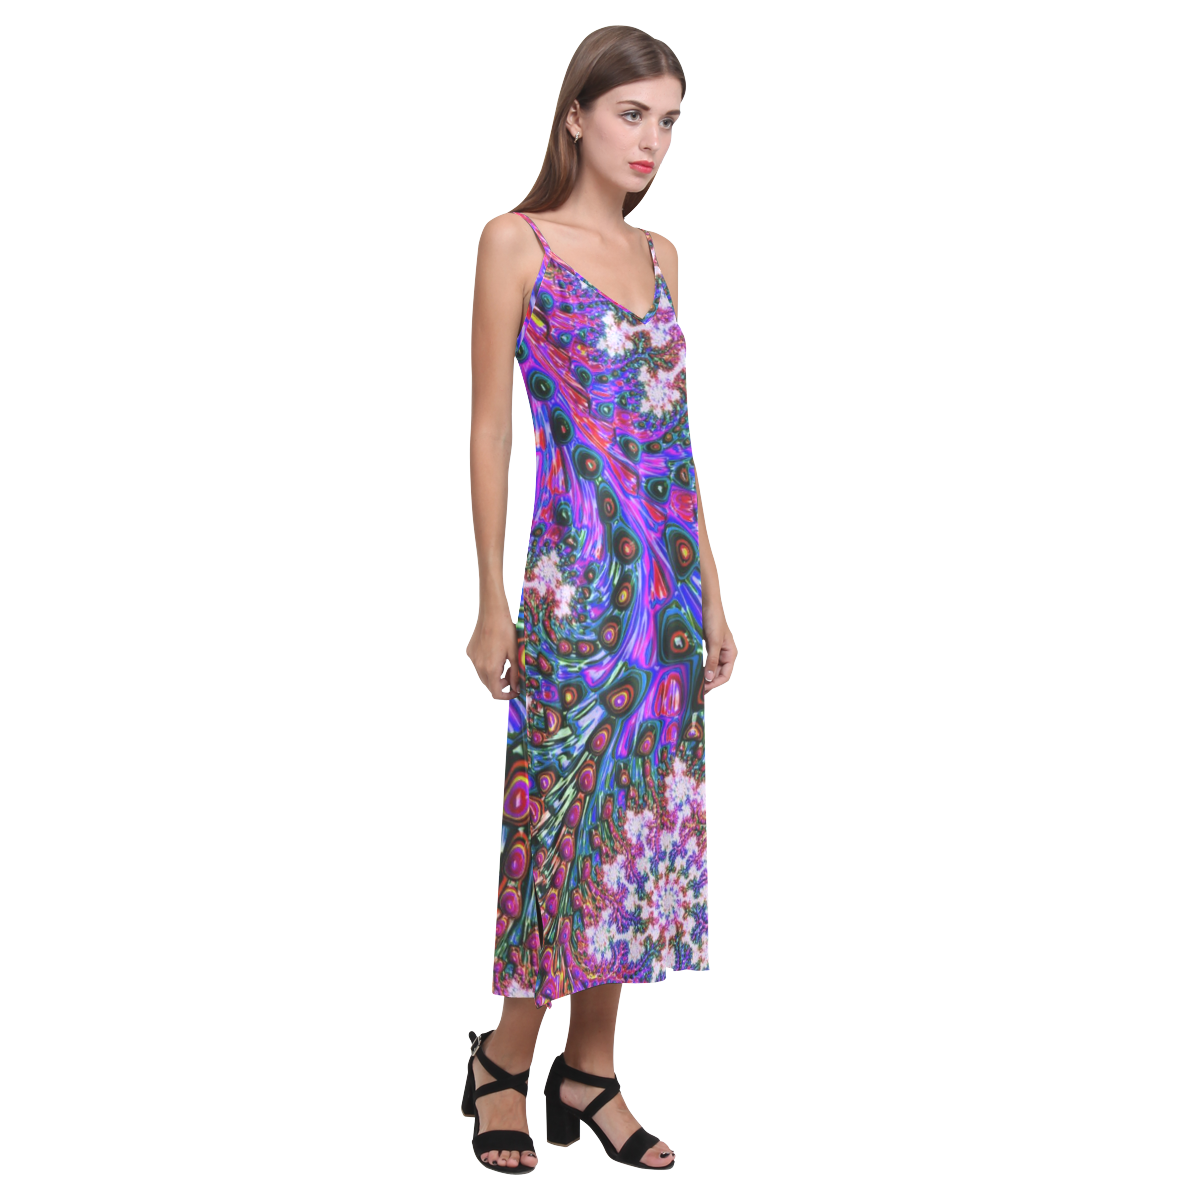 more colors in life fractal 24B V-Neck Open Fork Long Dress(Model D18)